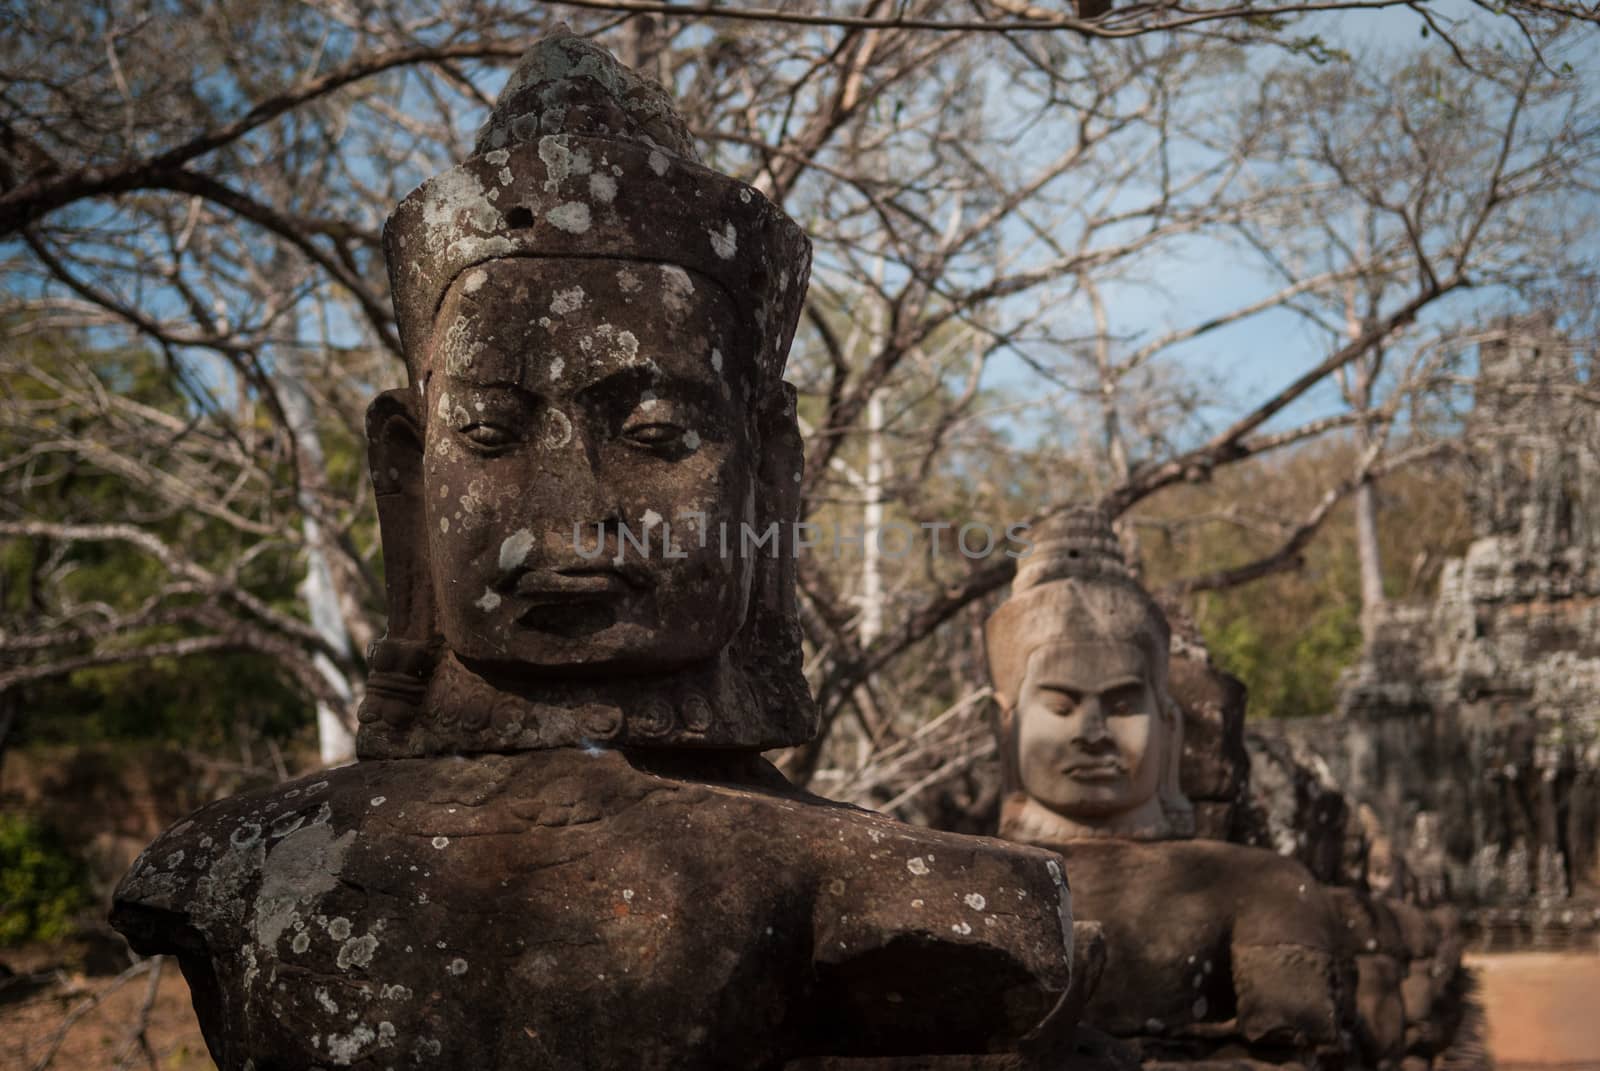 Daemons statues on a bridge at the Angkor entrance